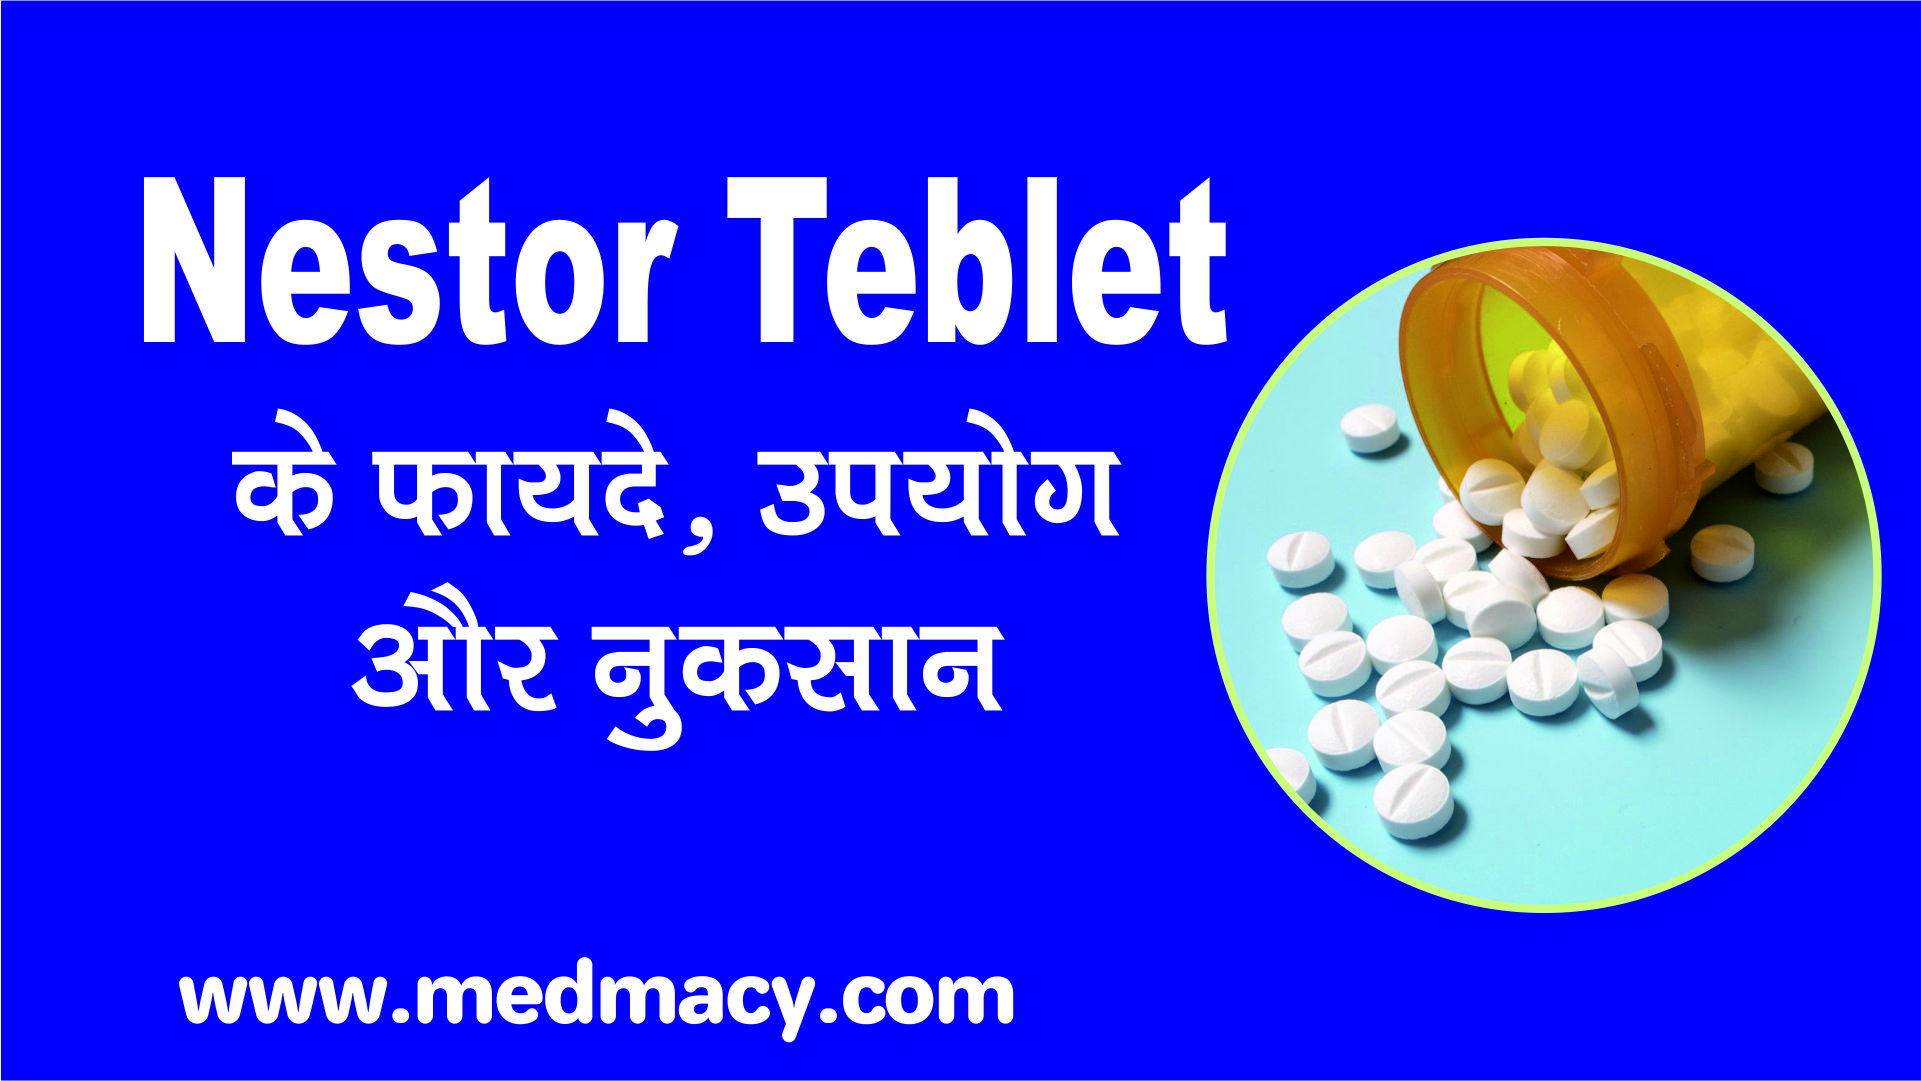 Nestor tablet uses in hindi